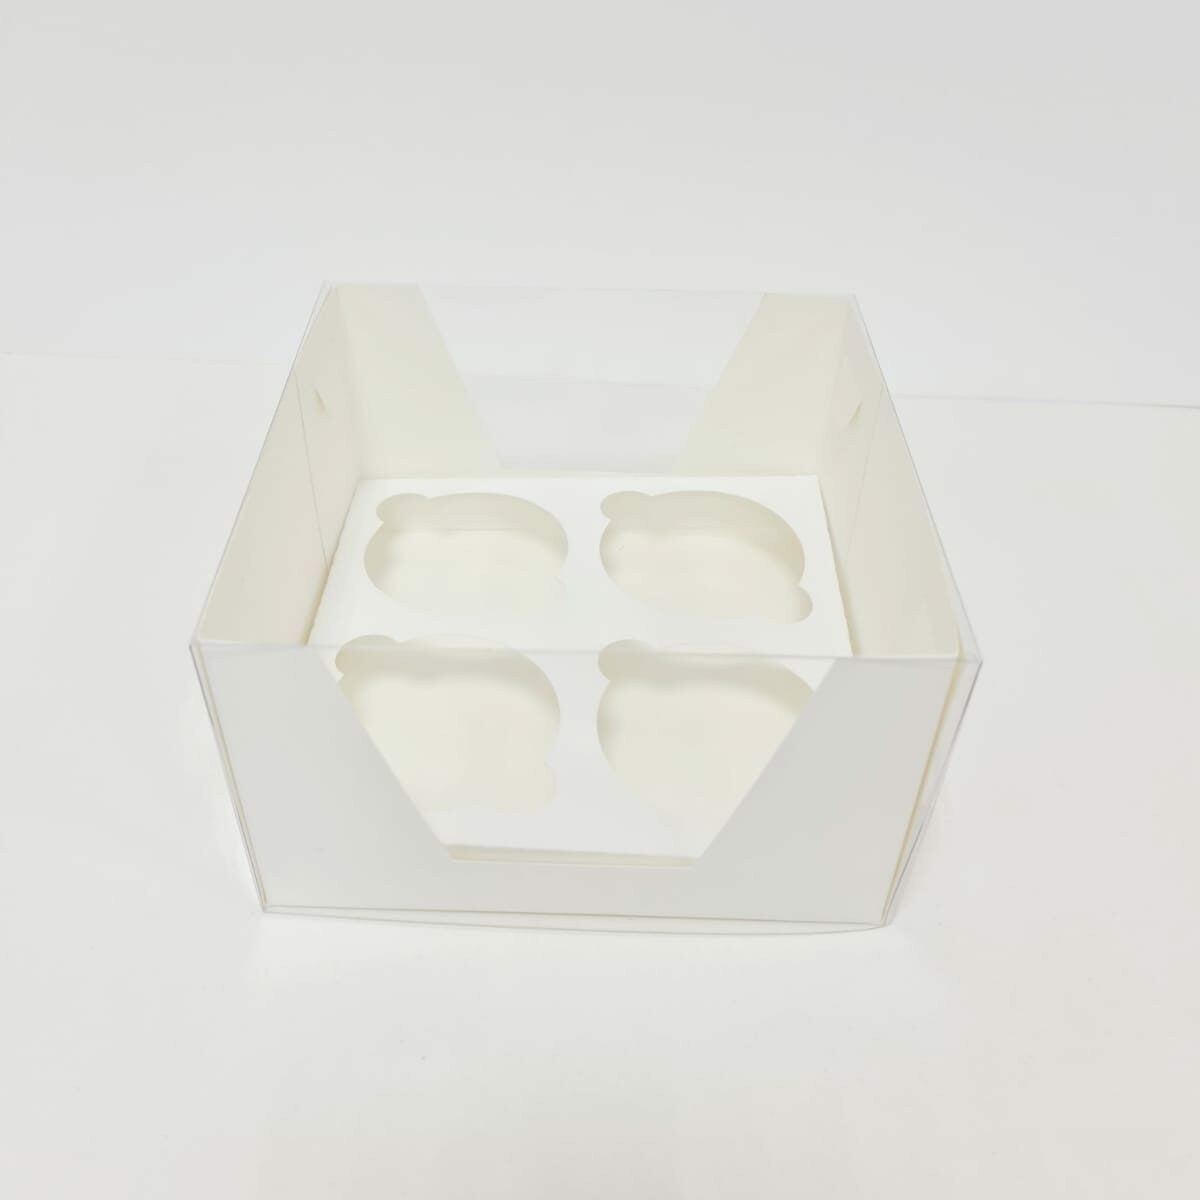 Коробка для капкейков на 4 шт. прозрачная, размер 160х160х95, цвет белый